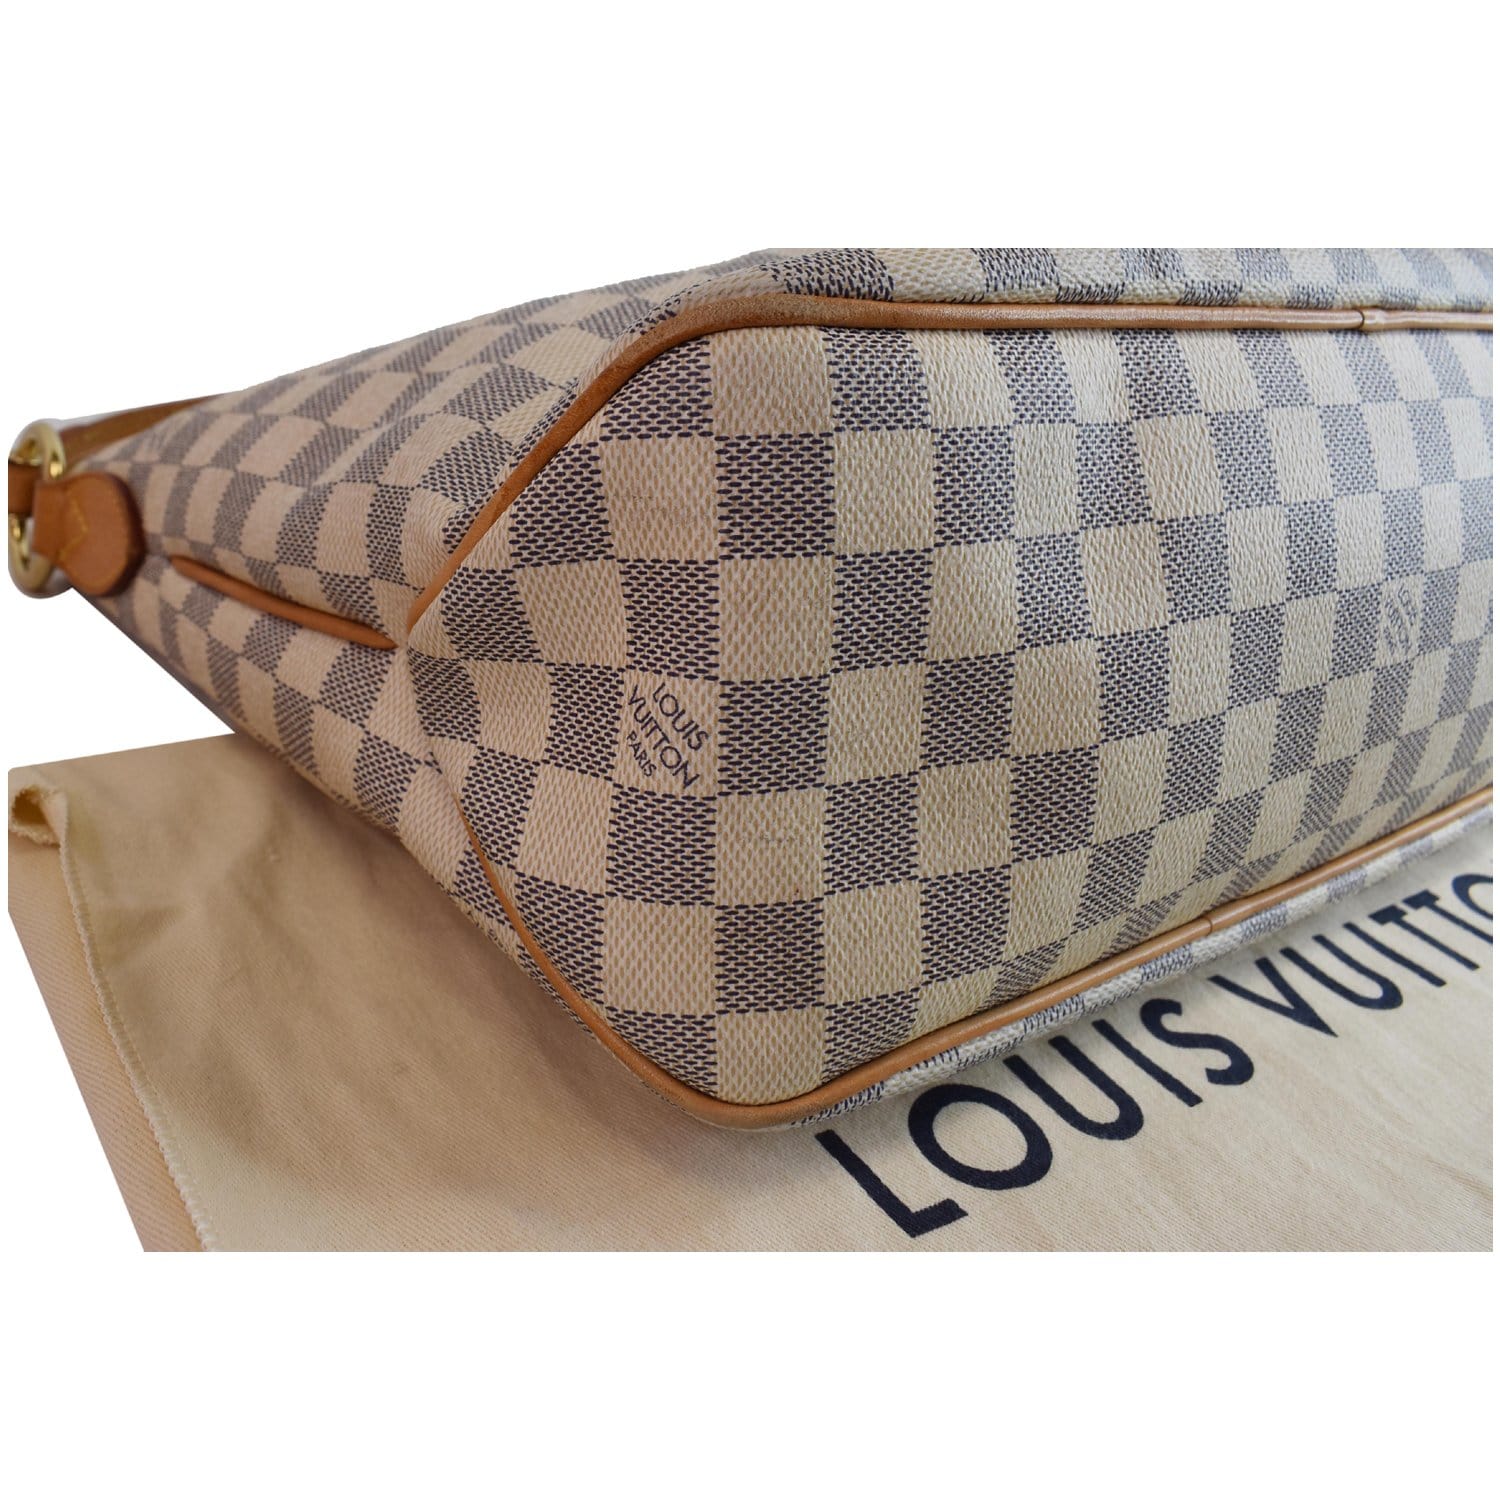 Replica Louis Vuitton N41462 Delightful PM Hobo Bag Damier Azur